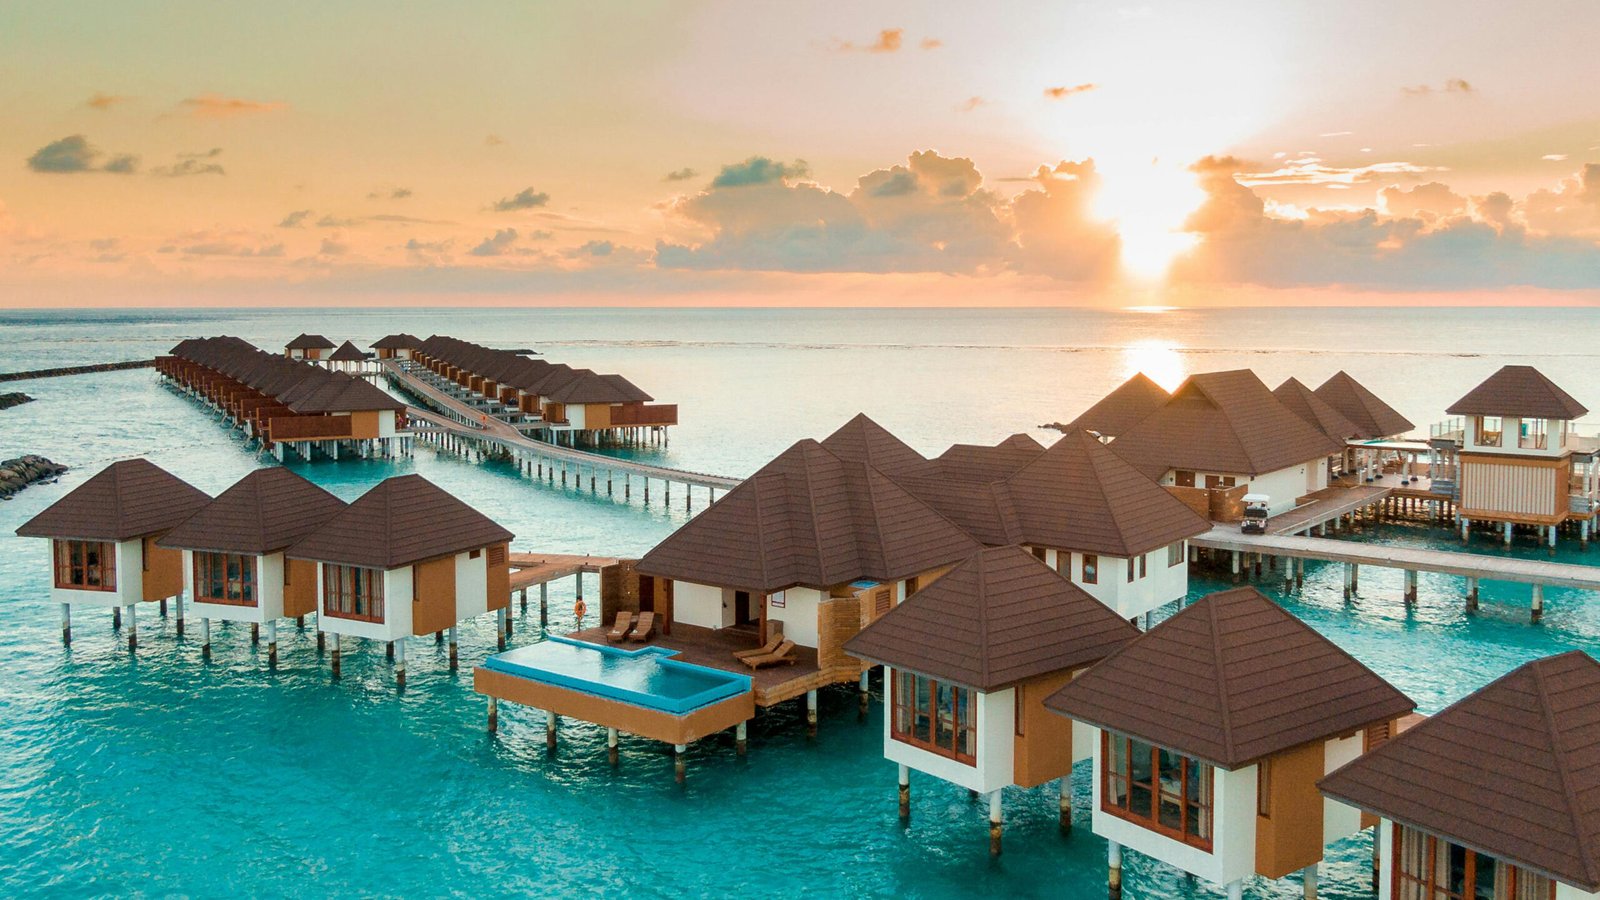 Maldives Tourism Decline Leads to Lakshadweep Tour Boom